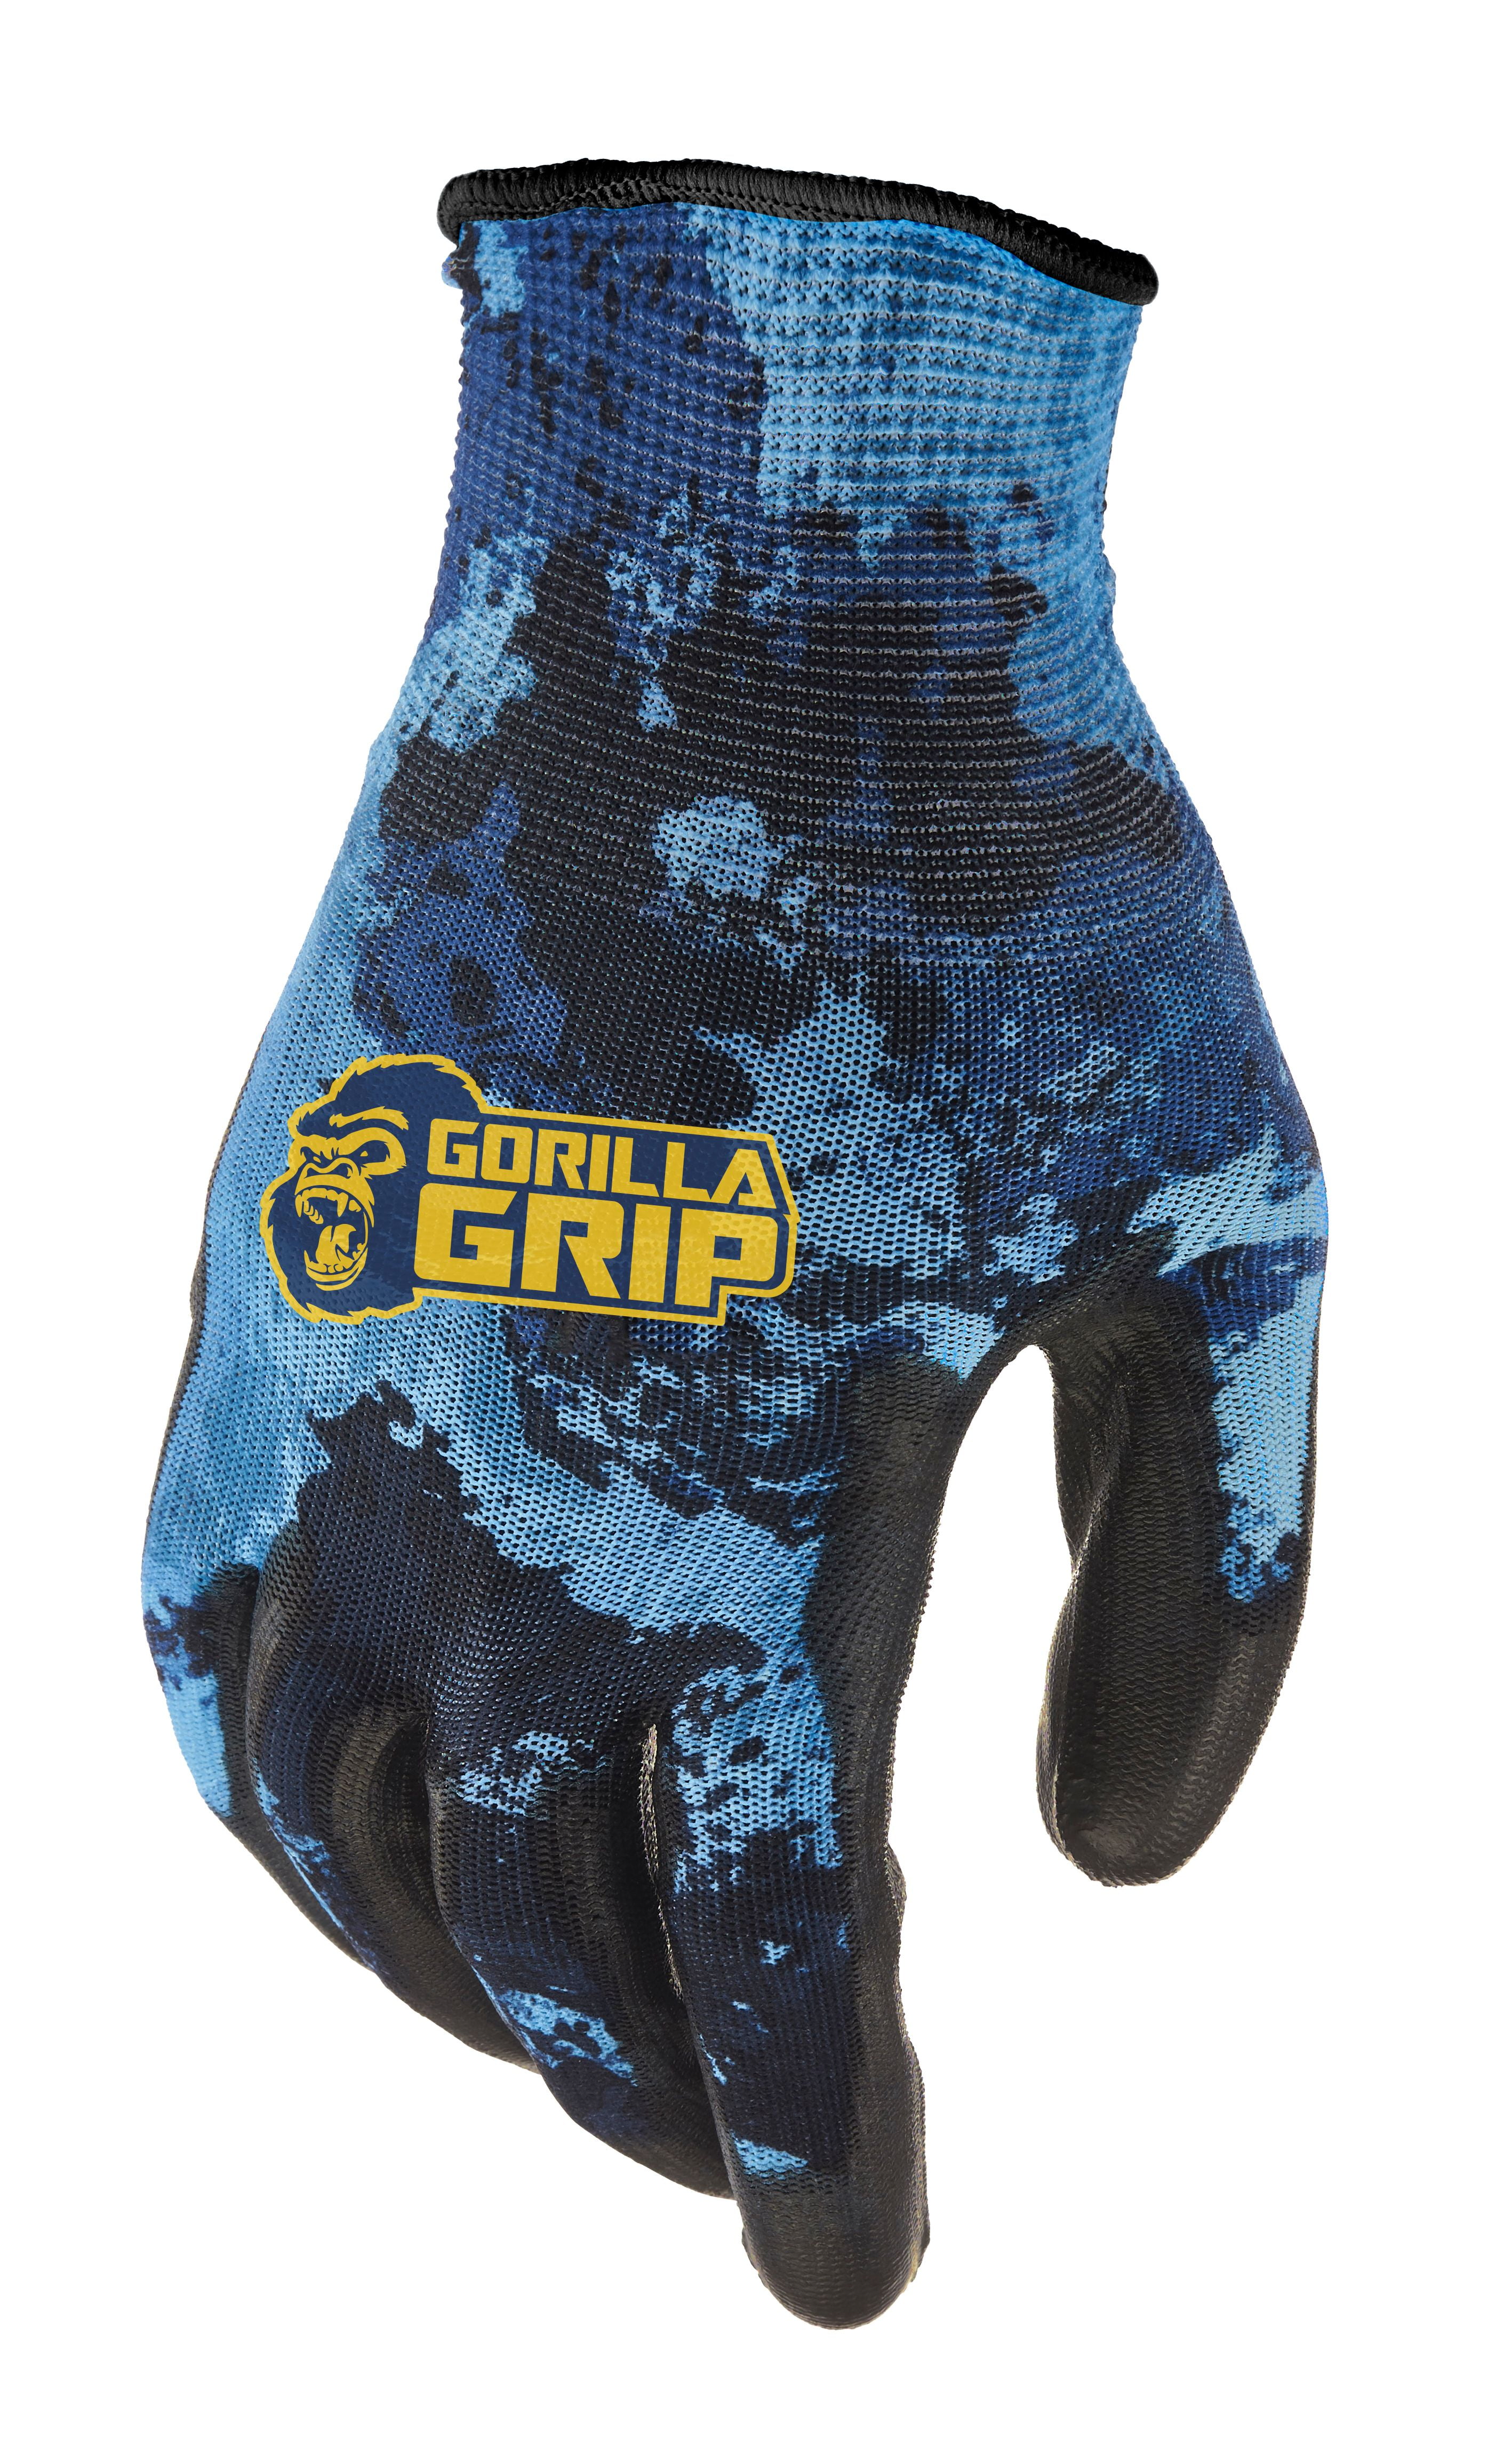 Gorilla Grip Veil Aqueous Blue, No Slip Fishing Gloves, Large